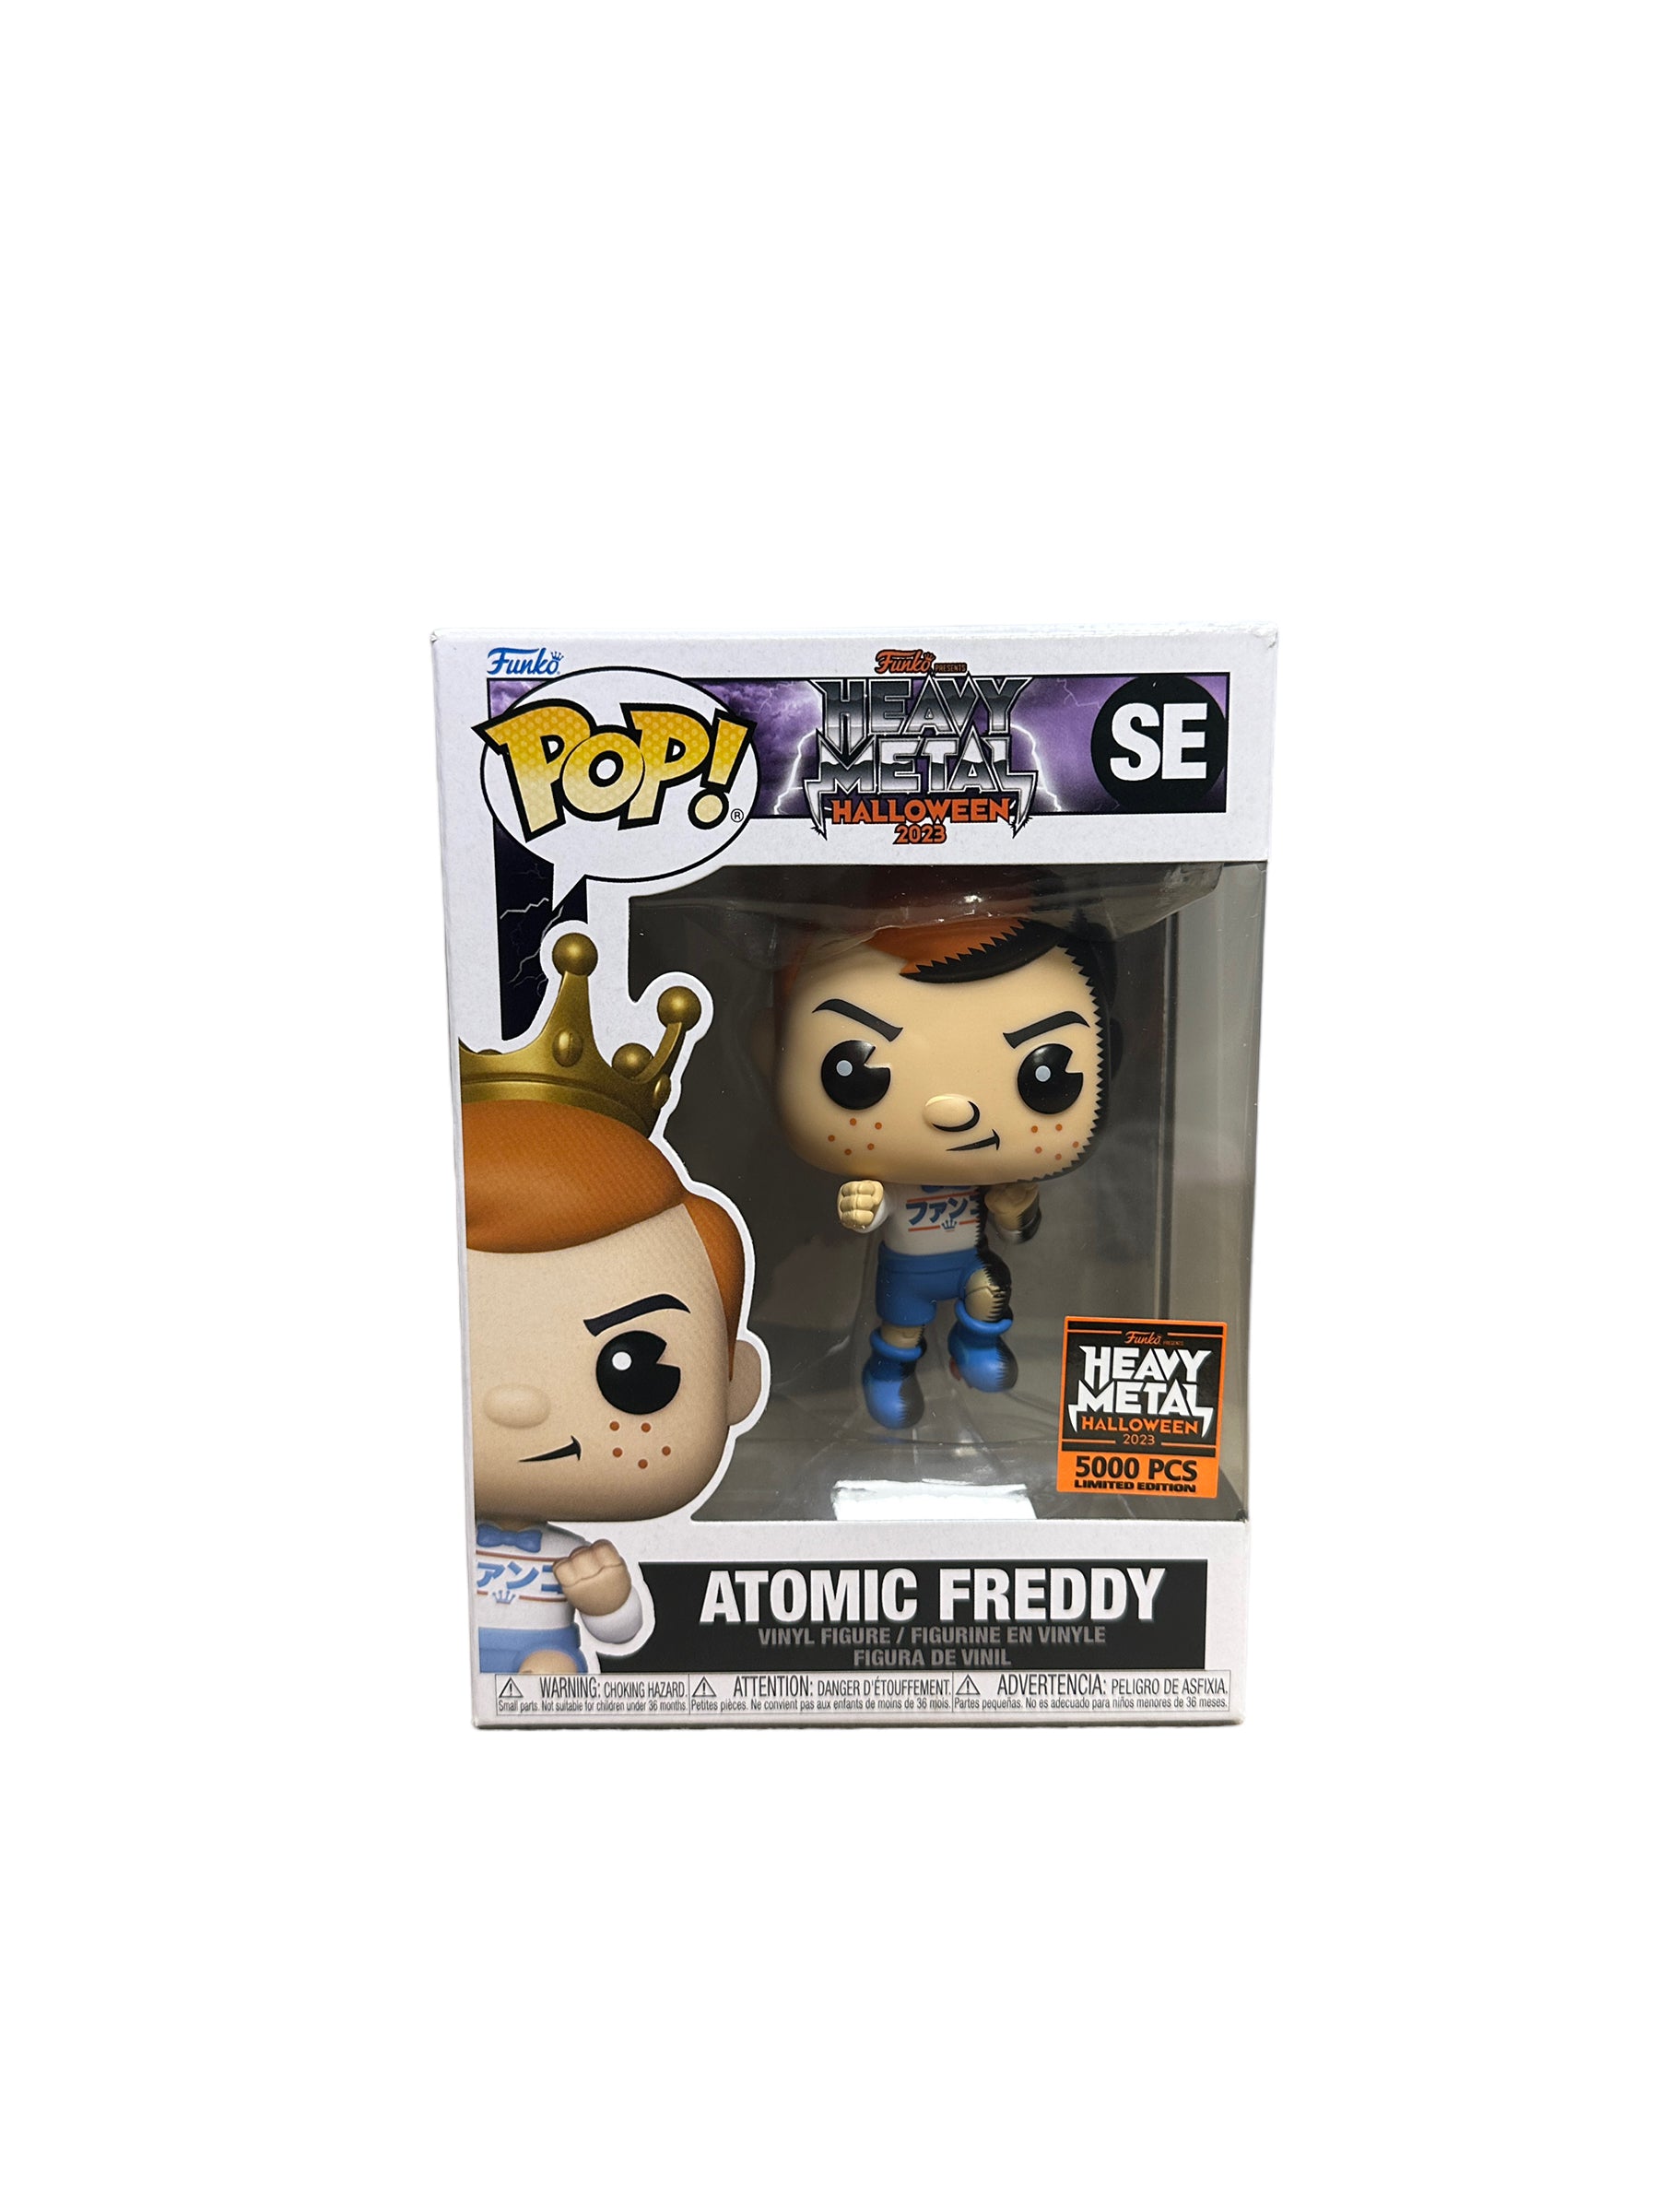 Atomic Freddy (Retro Comic) Funko Pop! - Heavy Metal Halloween 2023 Exclusive LE5000 Pcs - Condition 9.5/10